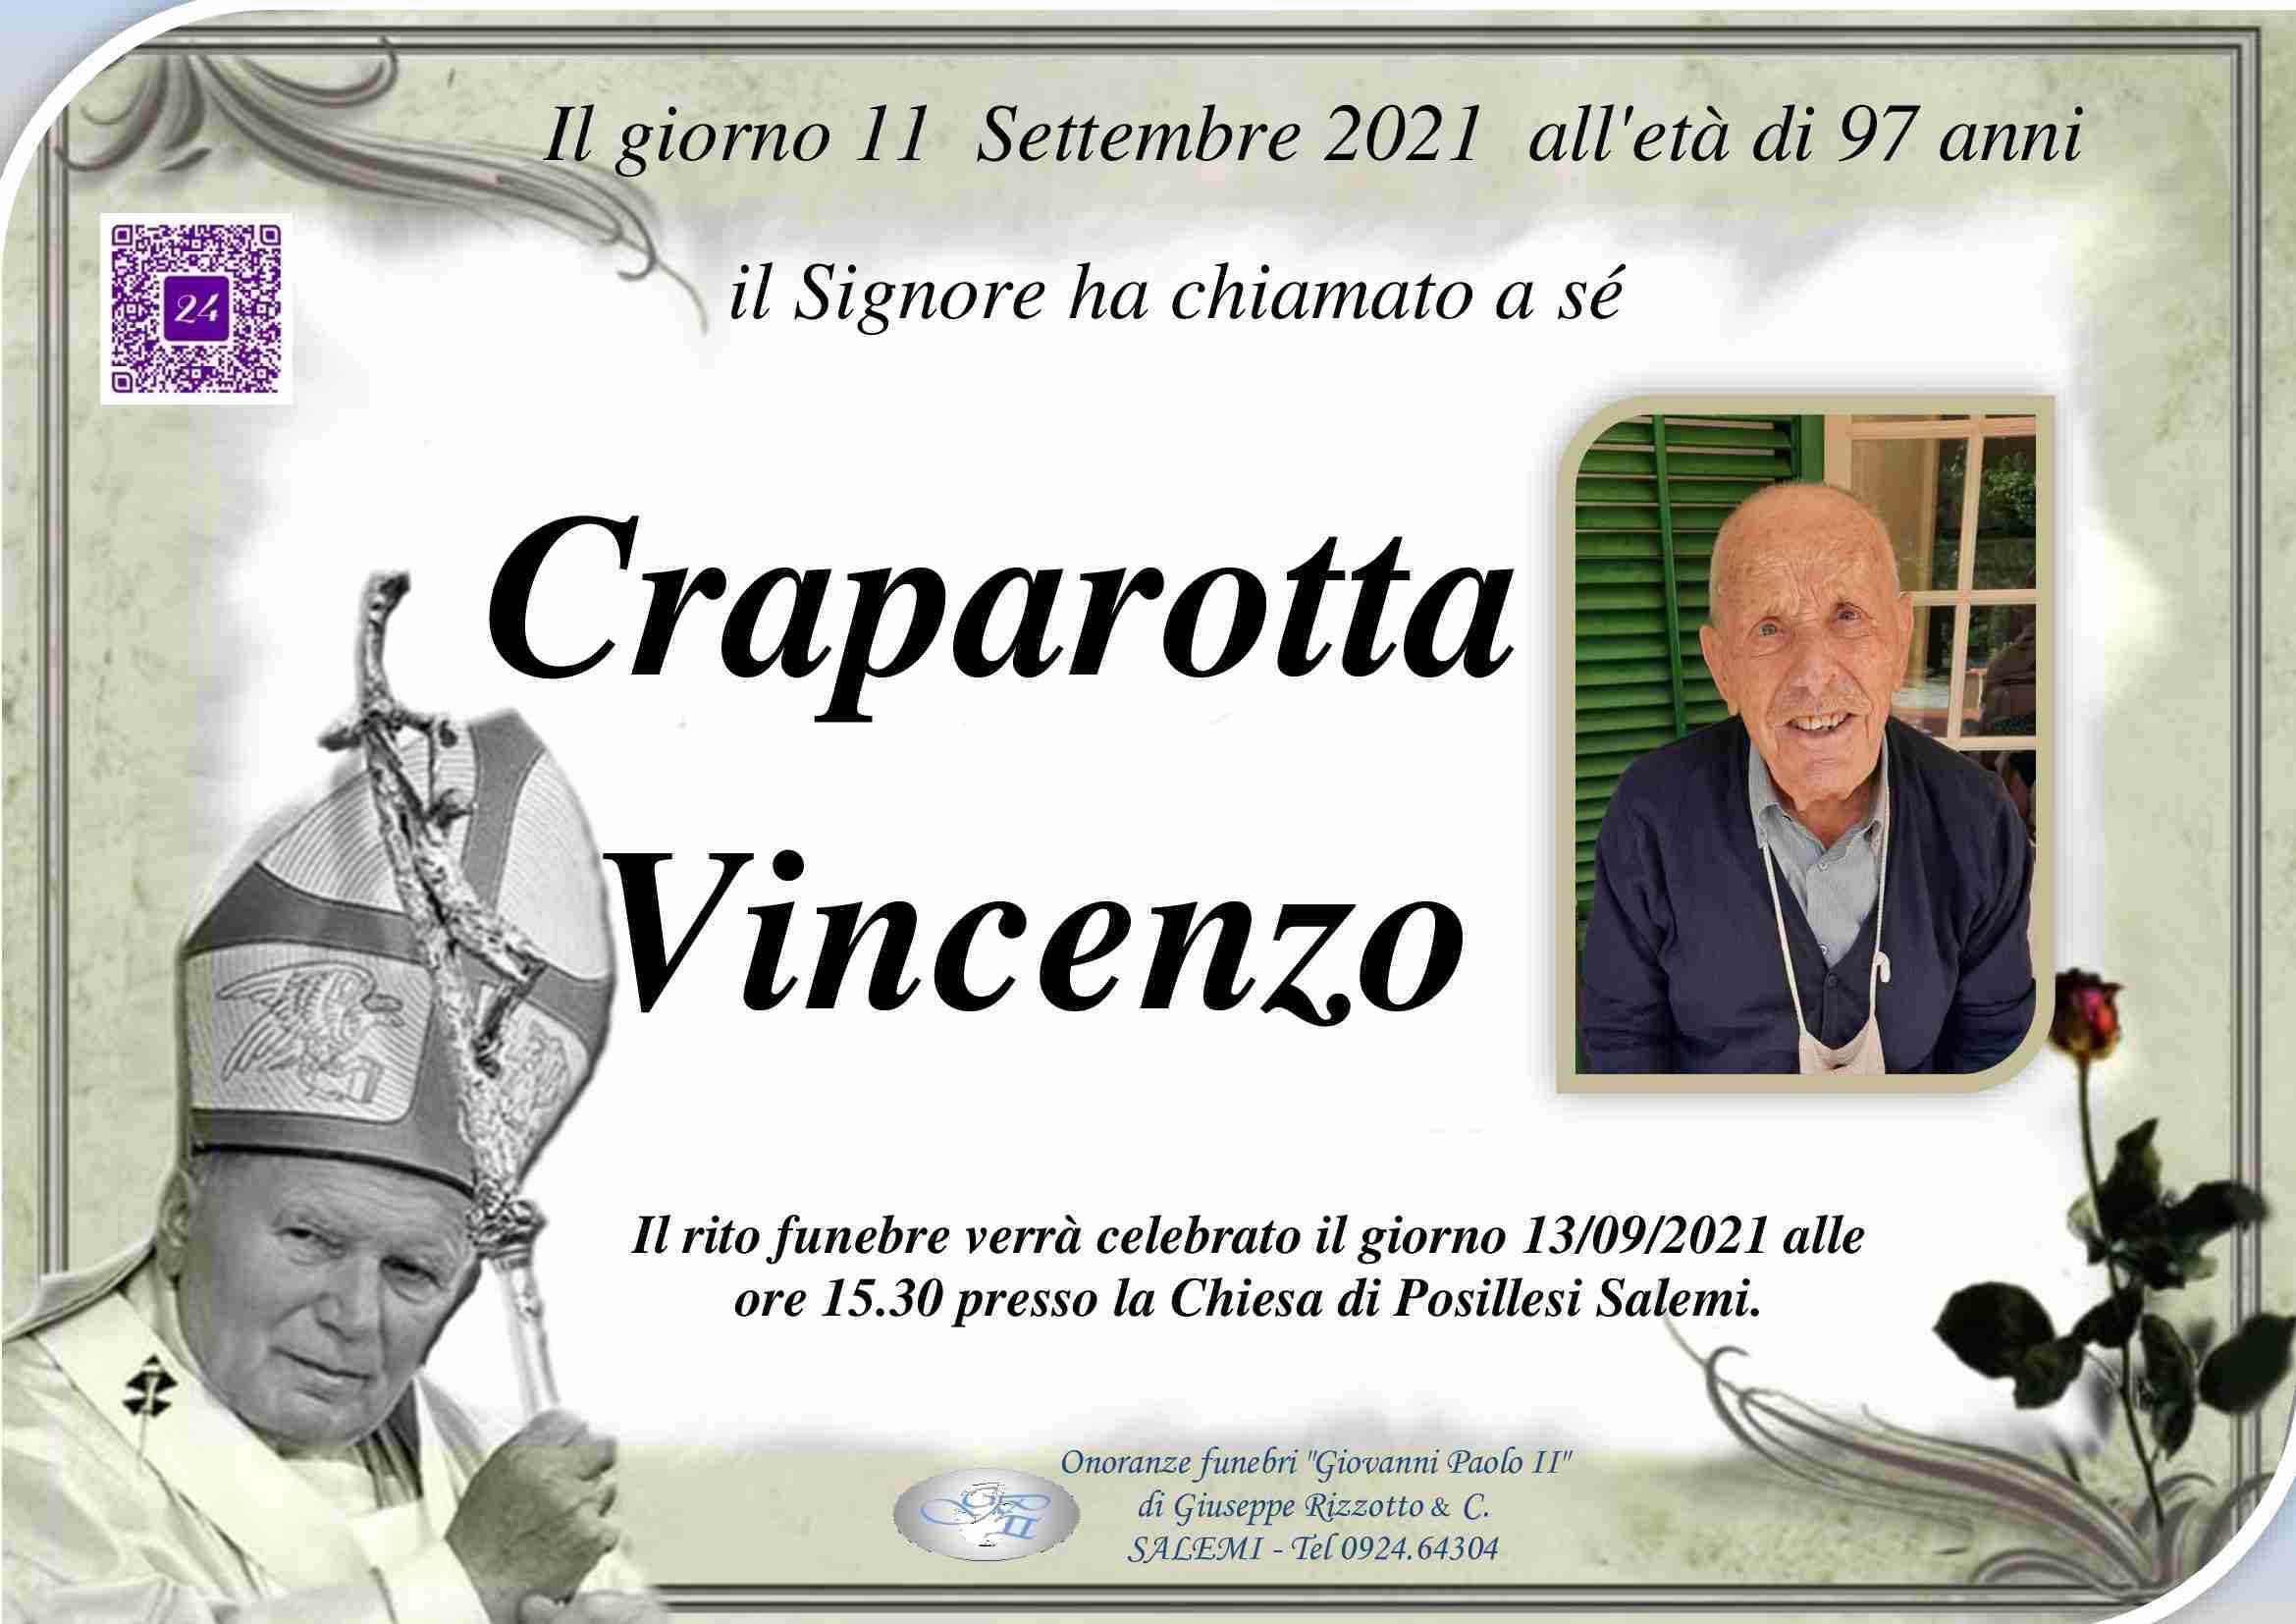 Vincenzo Craparotta